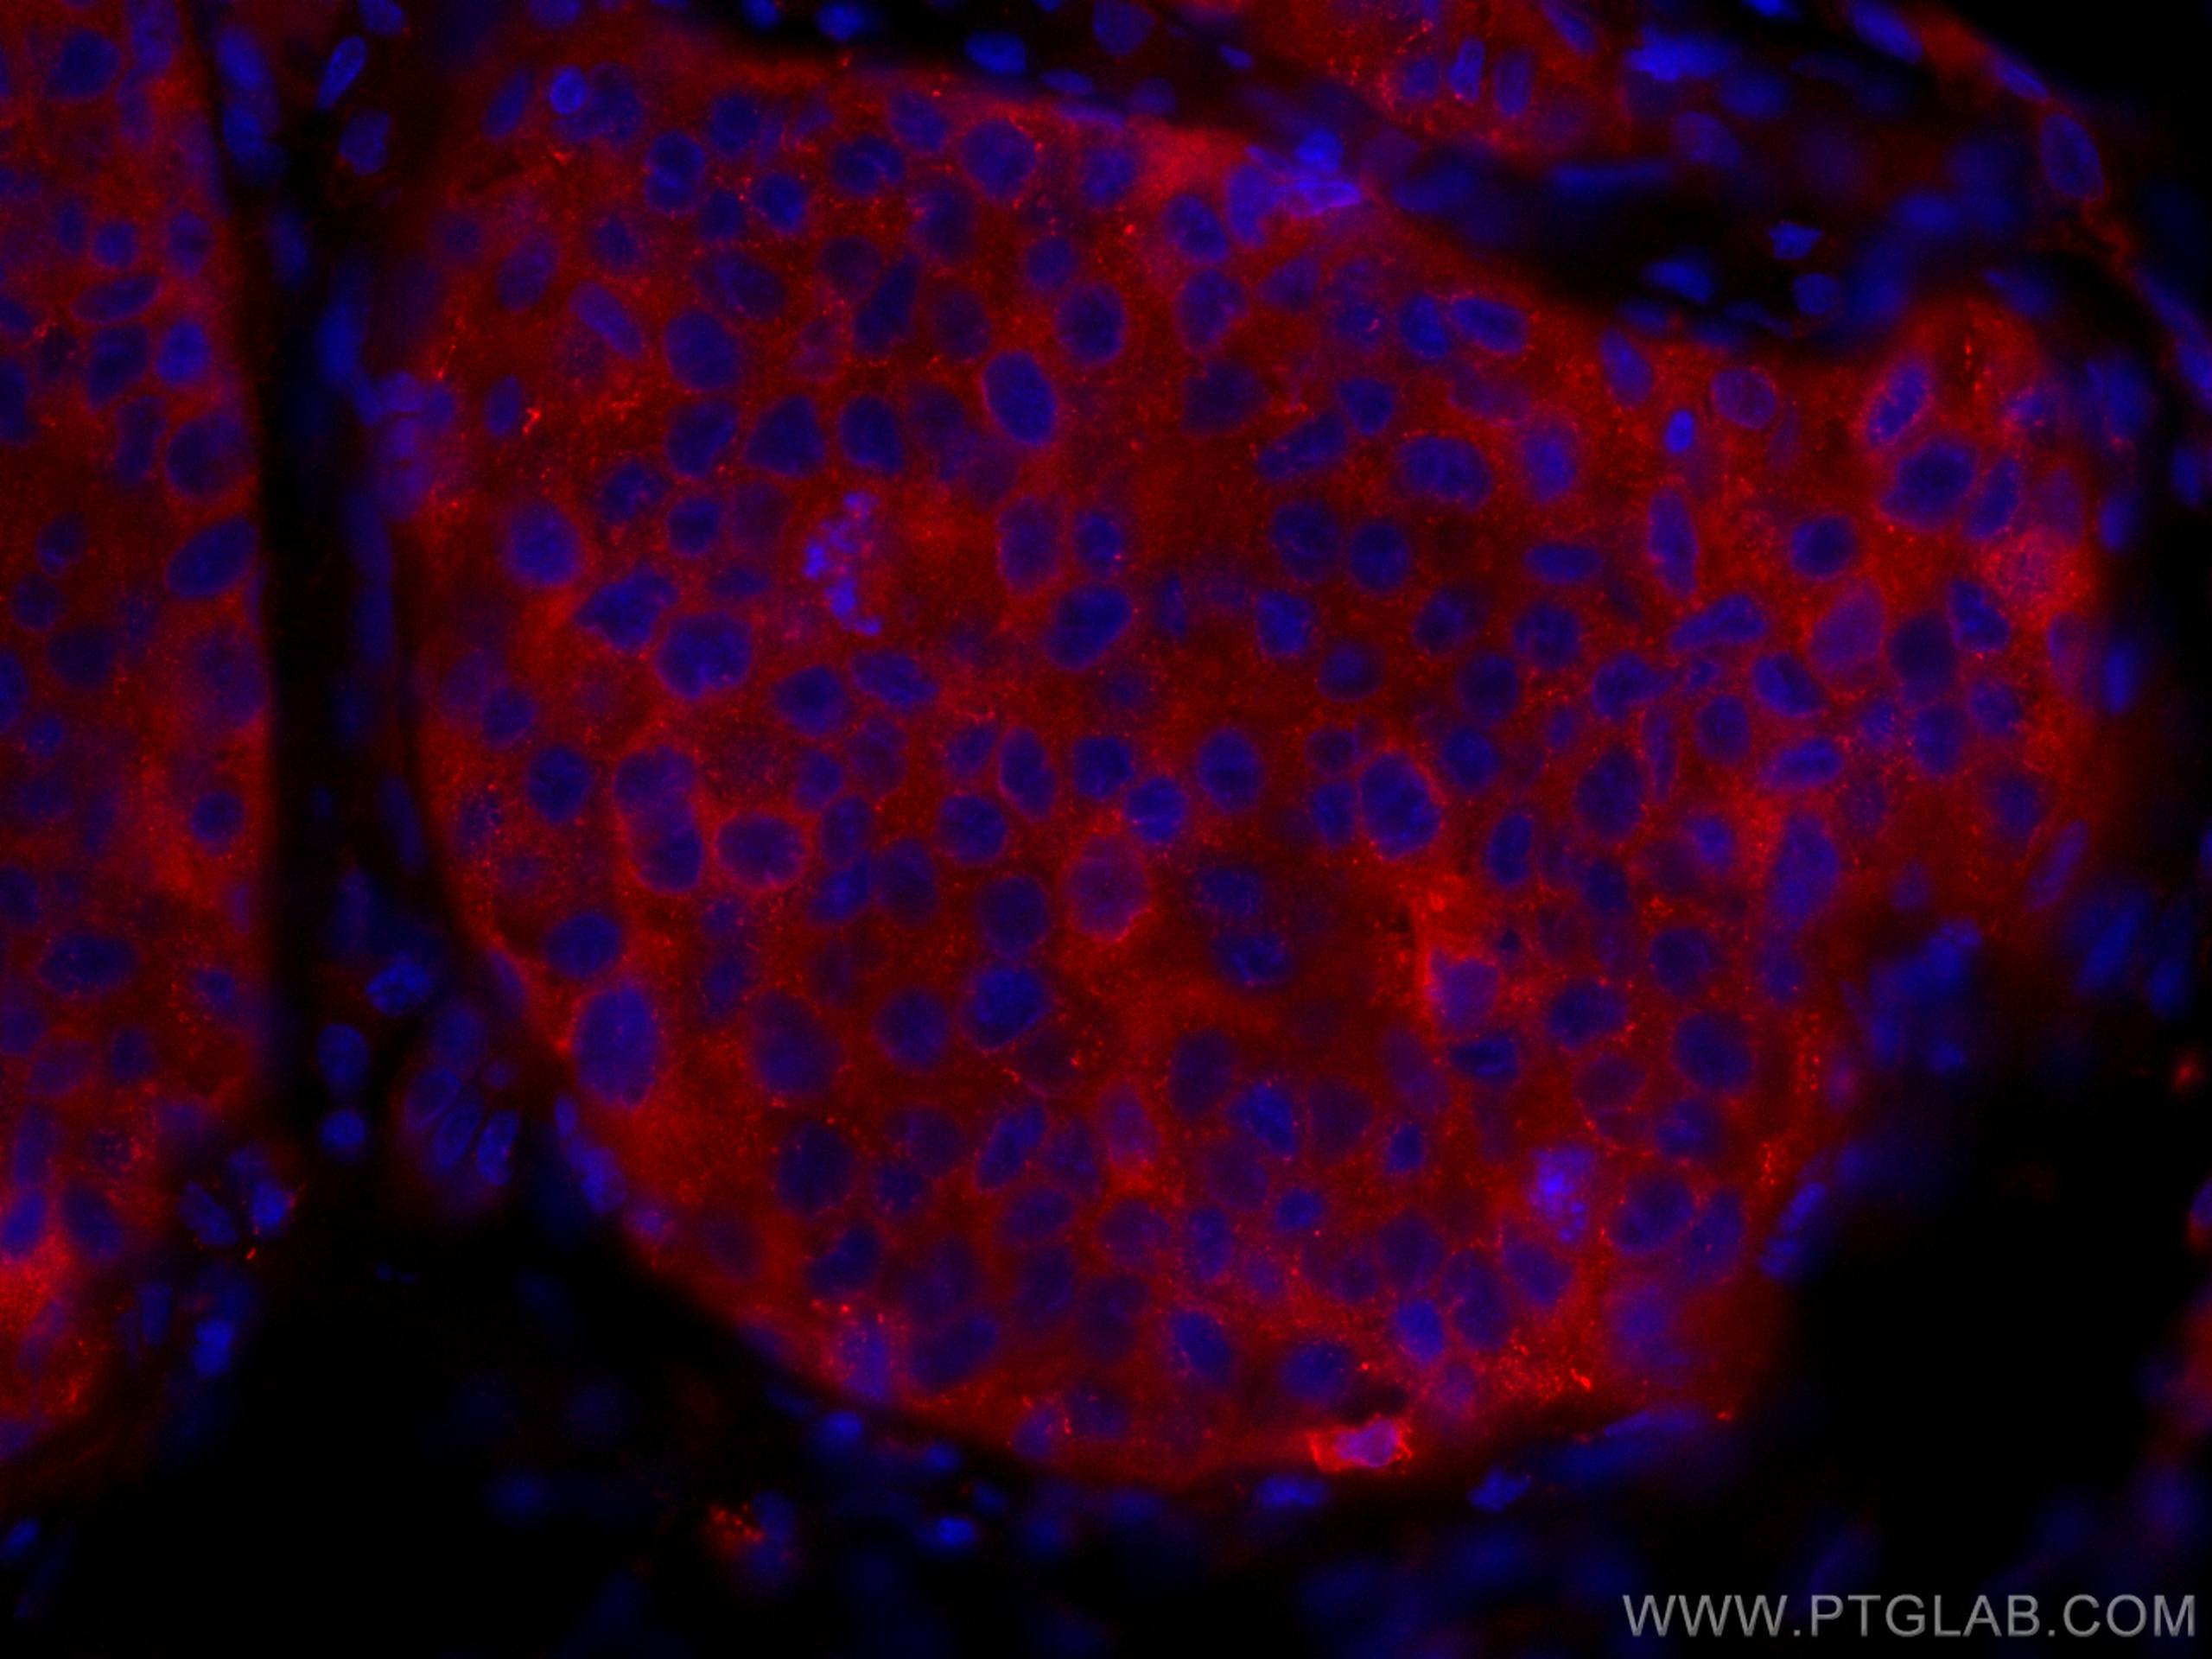 KEAP1 Antibody IF human breast cancer tissue CL594-10503